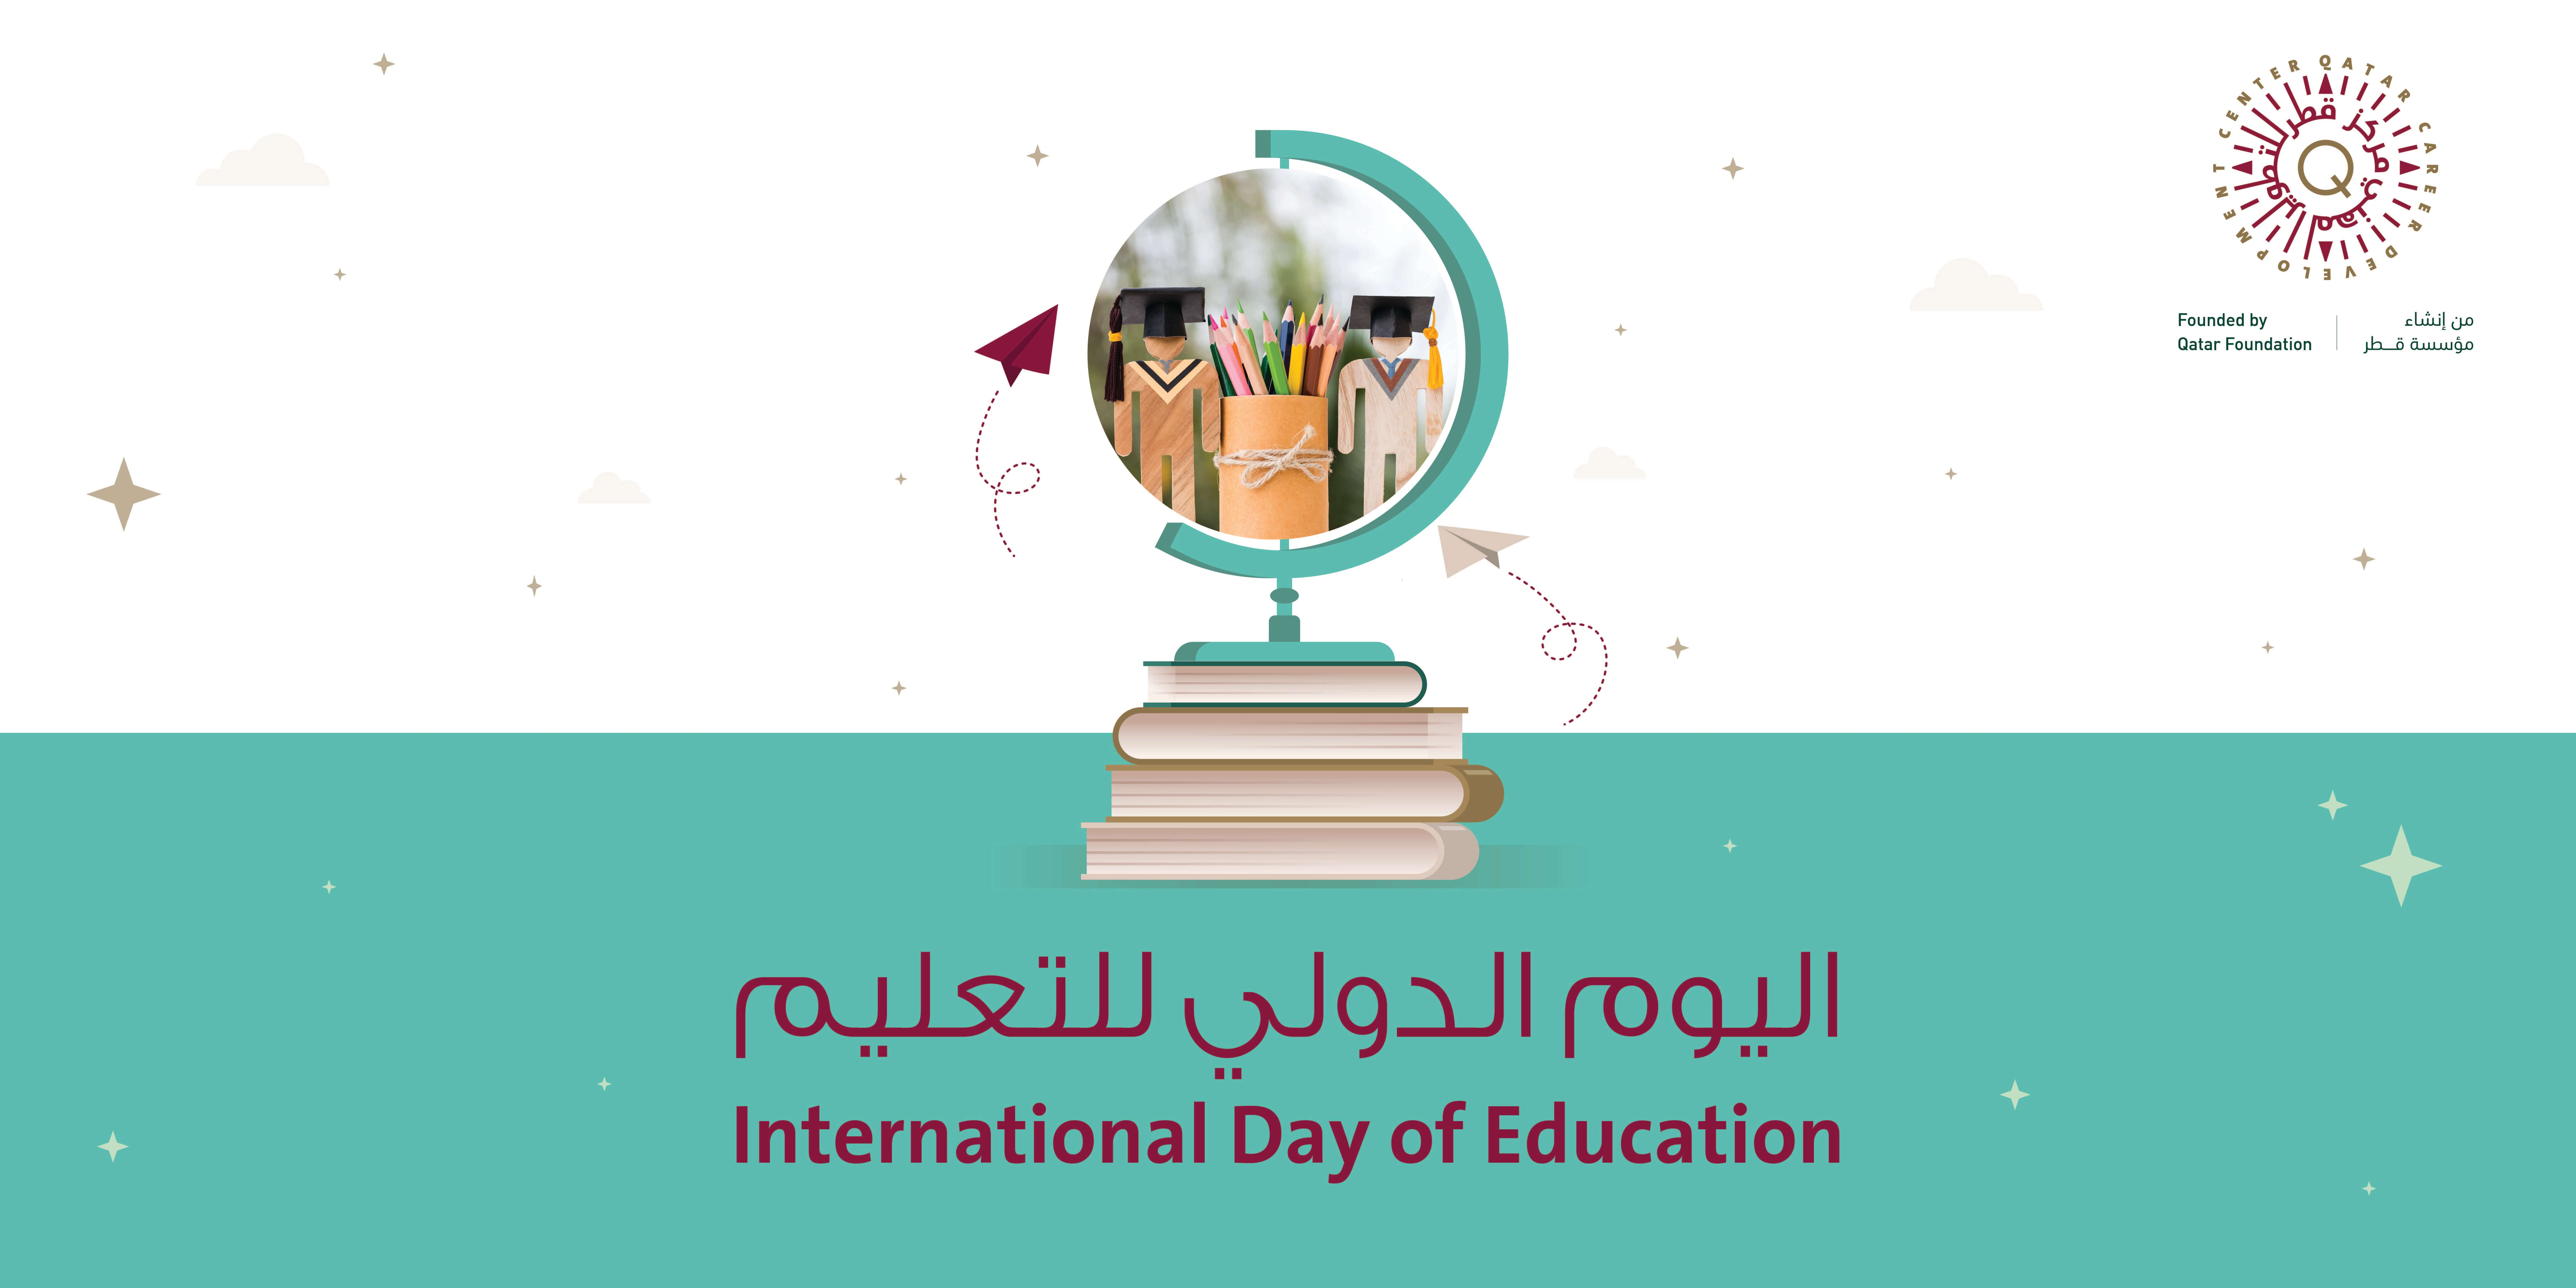 Expert Opinion: Celebrating International Day of Education